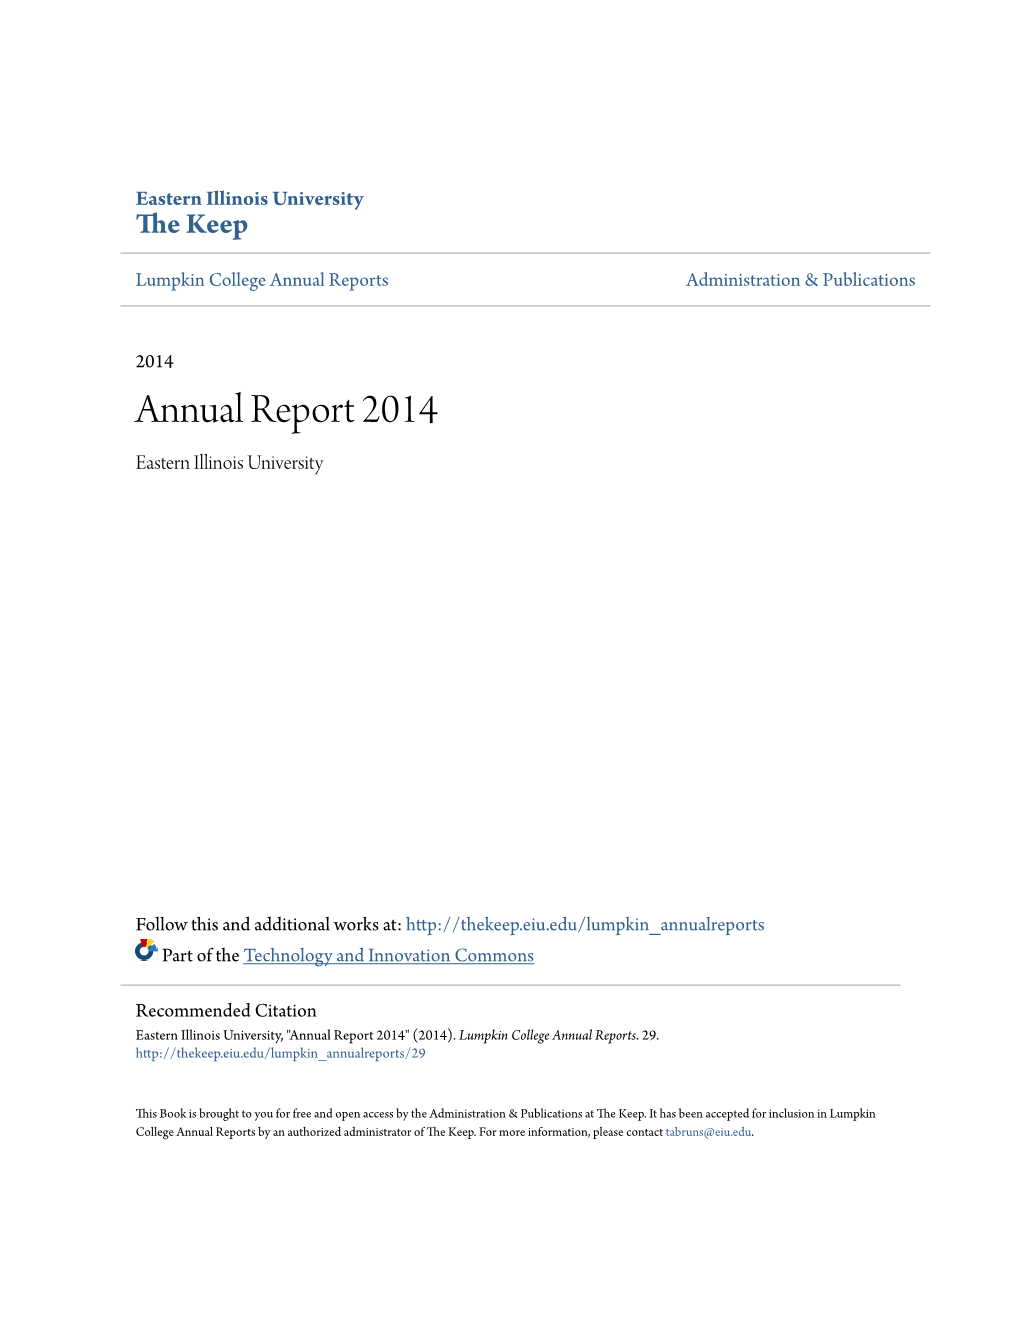 Annual Report 2014 Eastern Illinois University